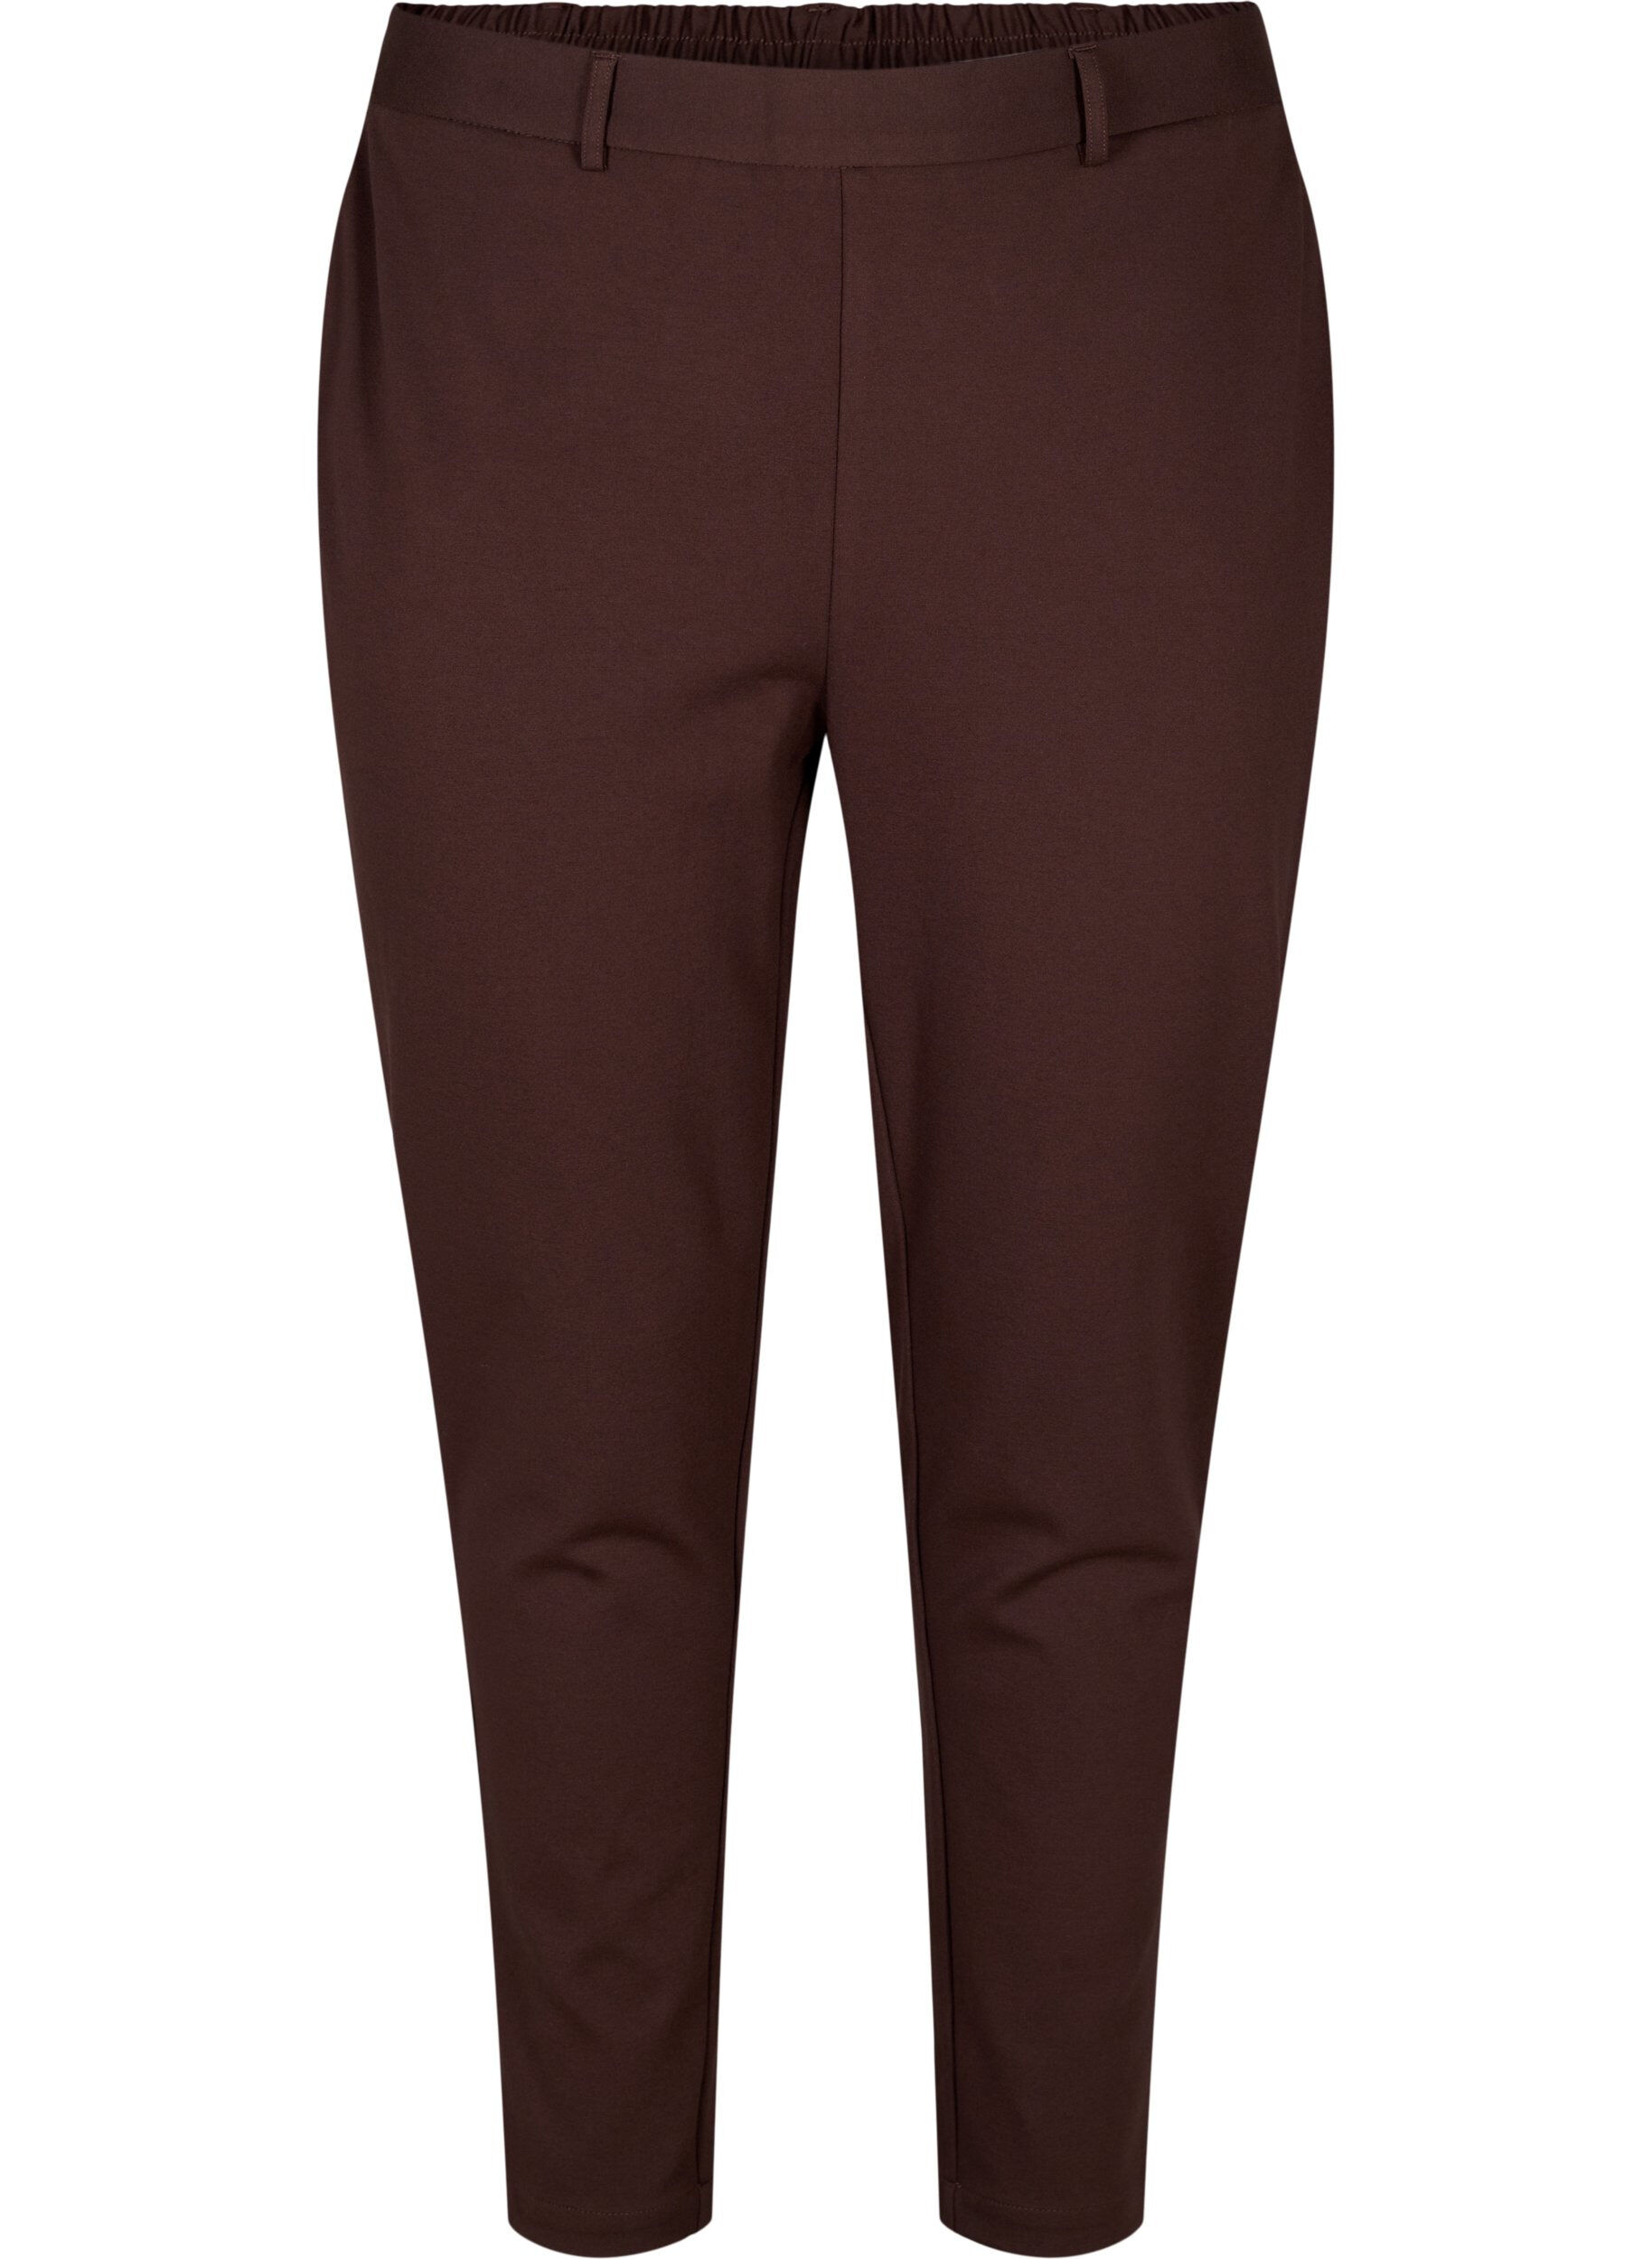 Wide linen-blend trousers - Dark brown - Ladies | H&M